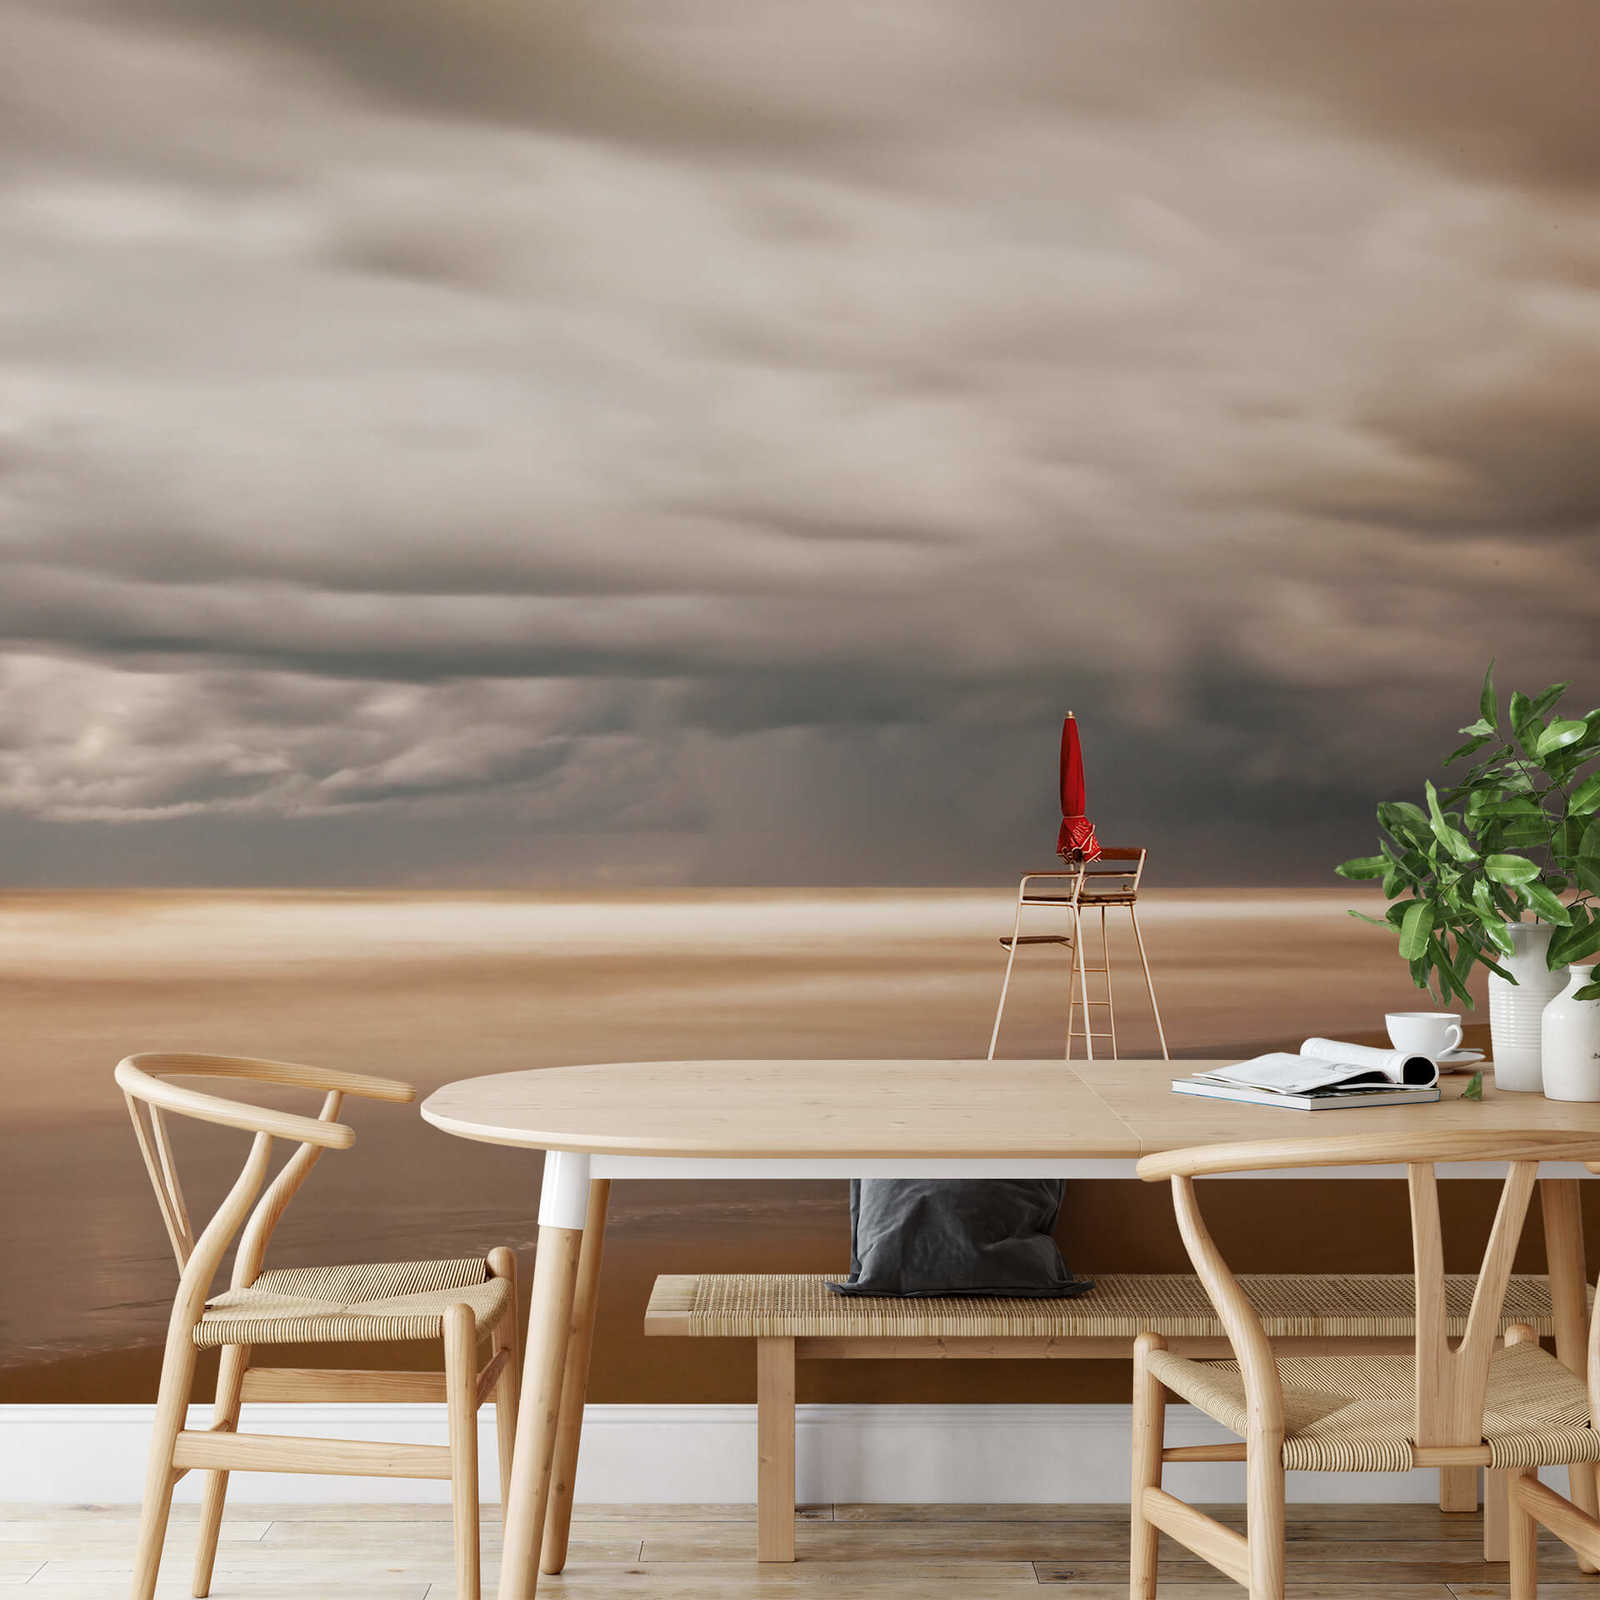             Fototapete Strand mit Stuhl – Creme, Grau
        